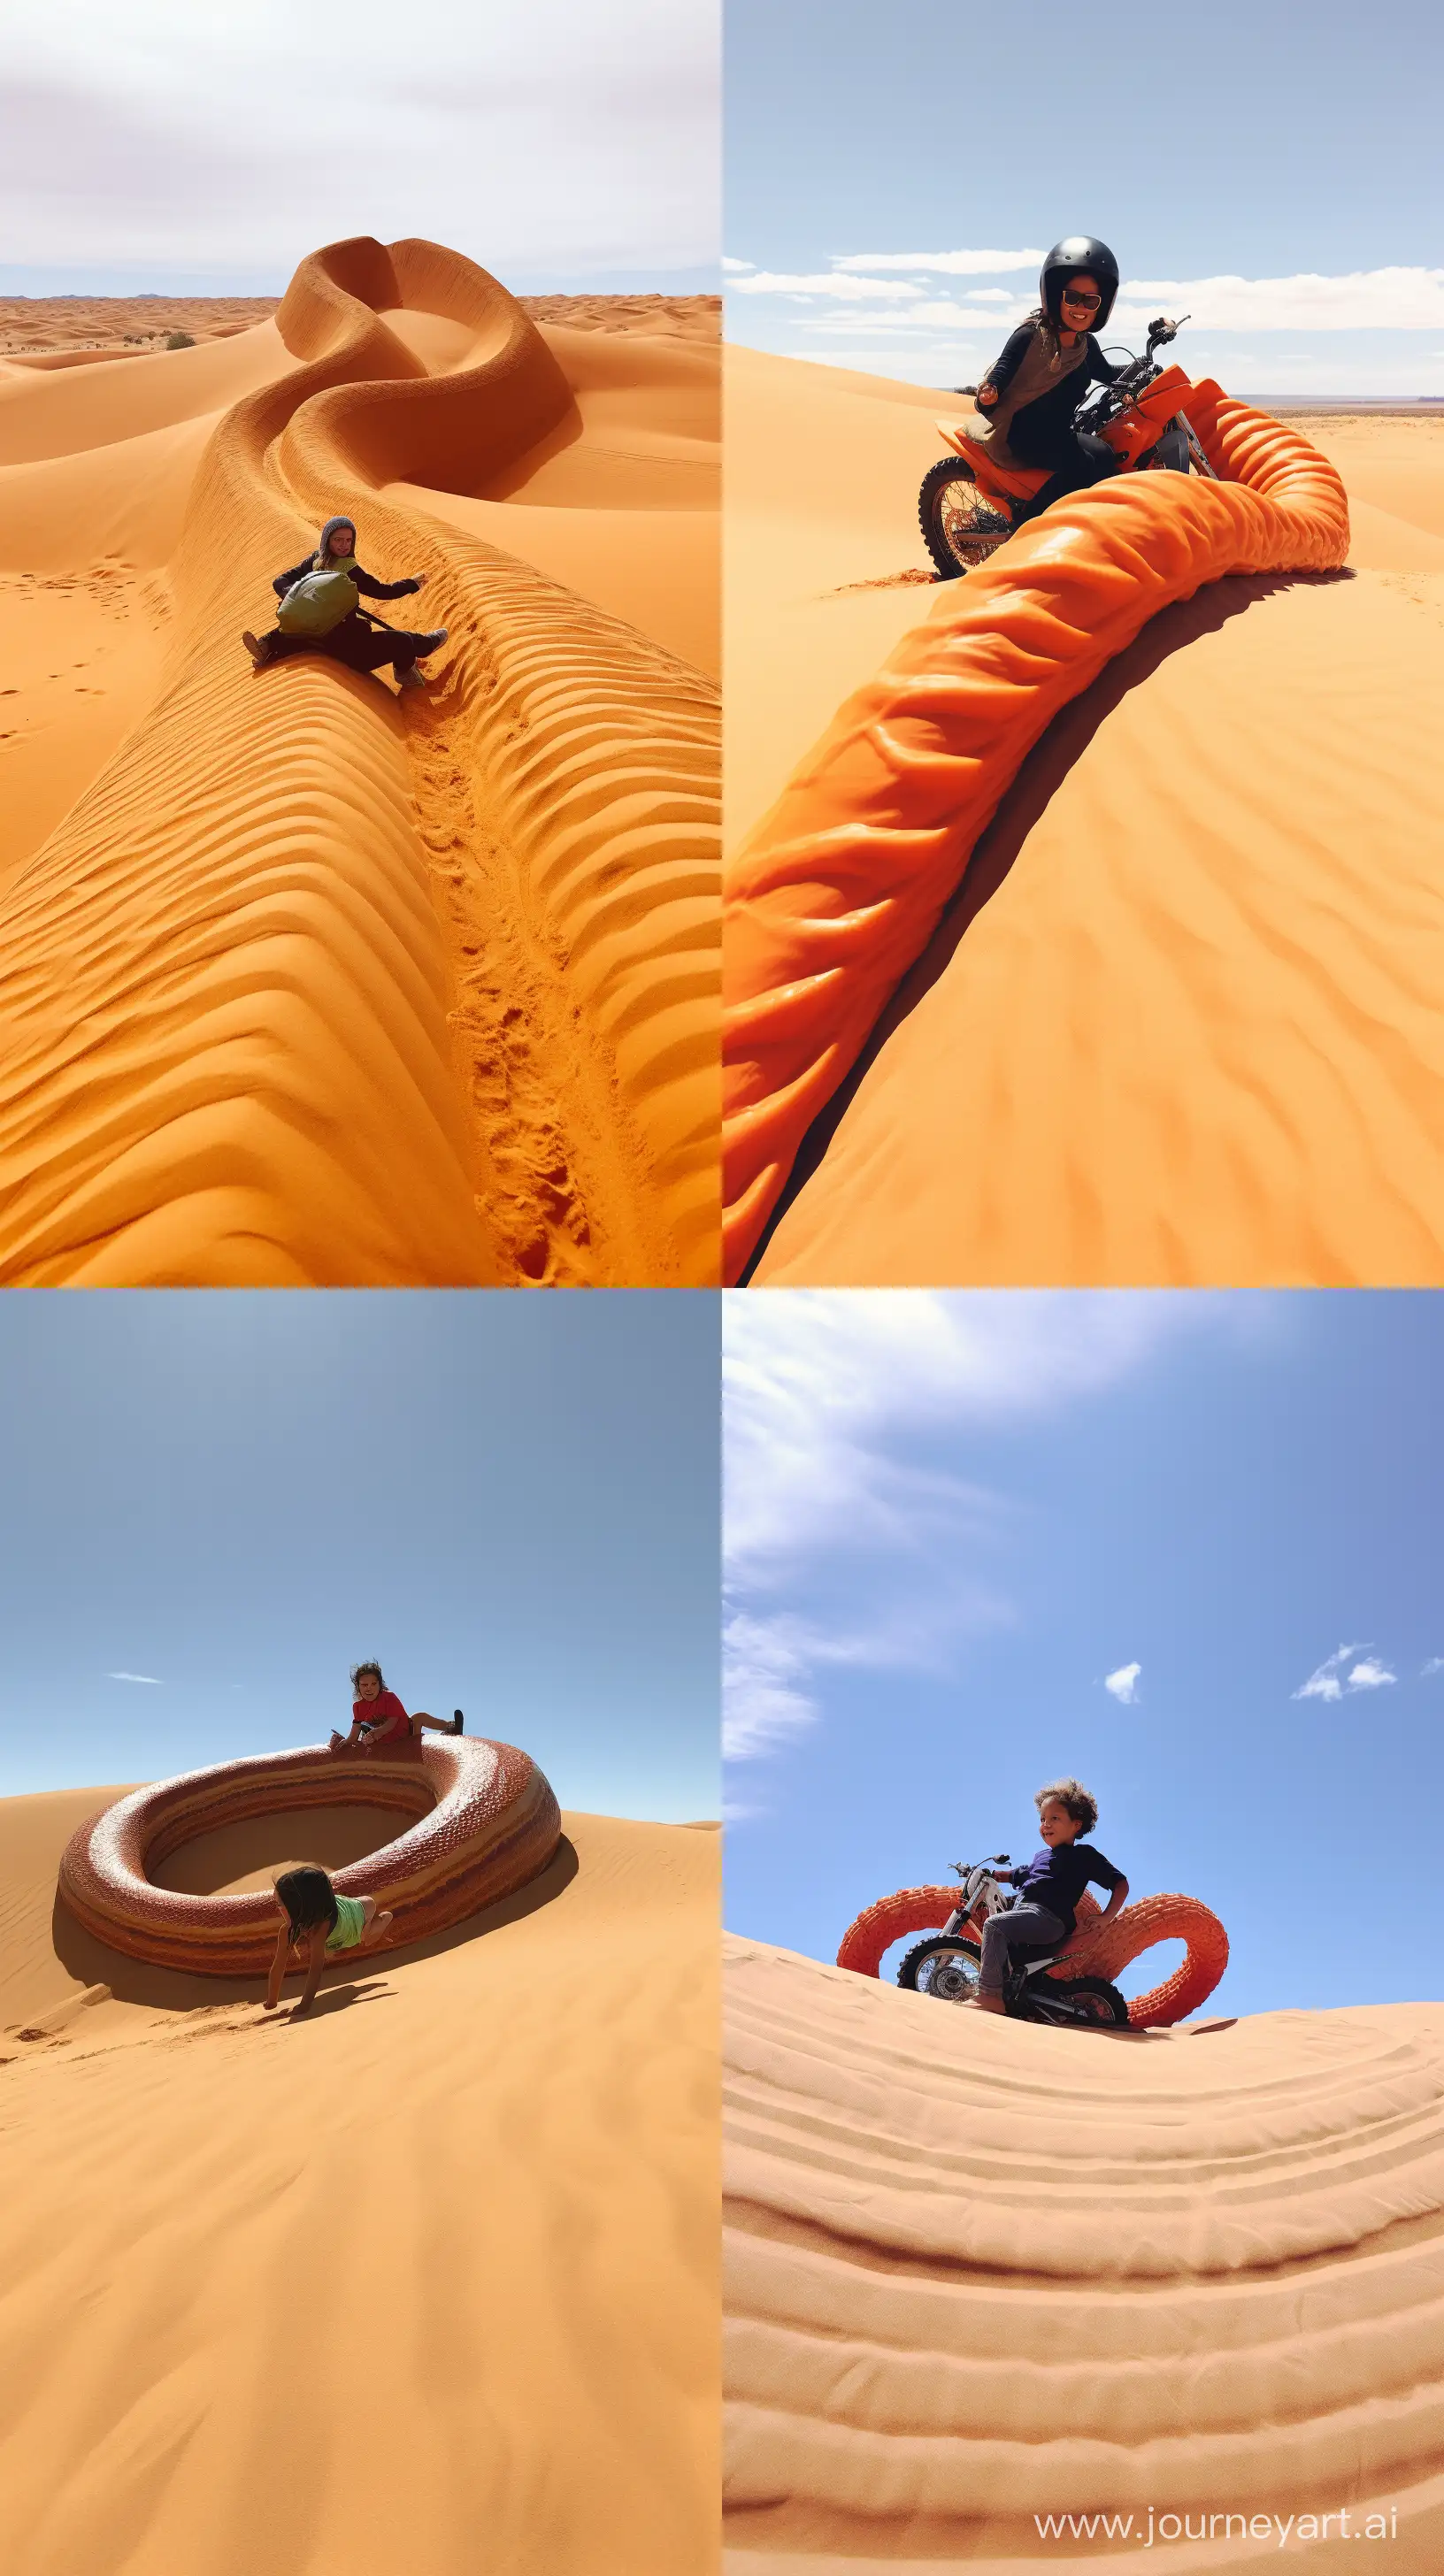 Zendaya-Riding-Majestic-Sand-Worm-in-Desert-iPhone-Raw-Photo